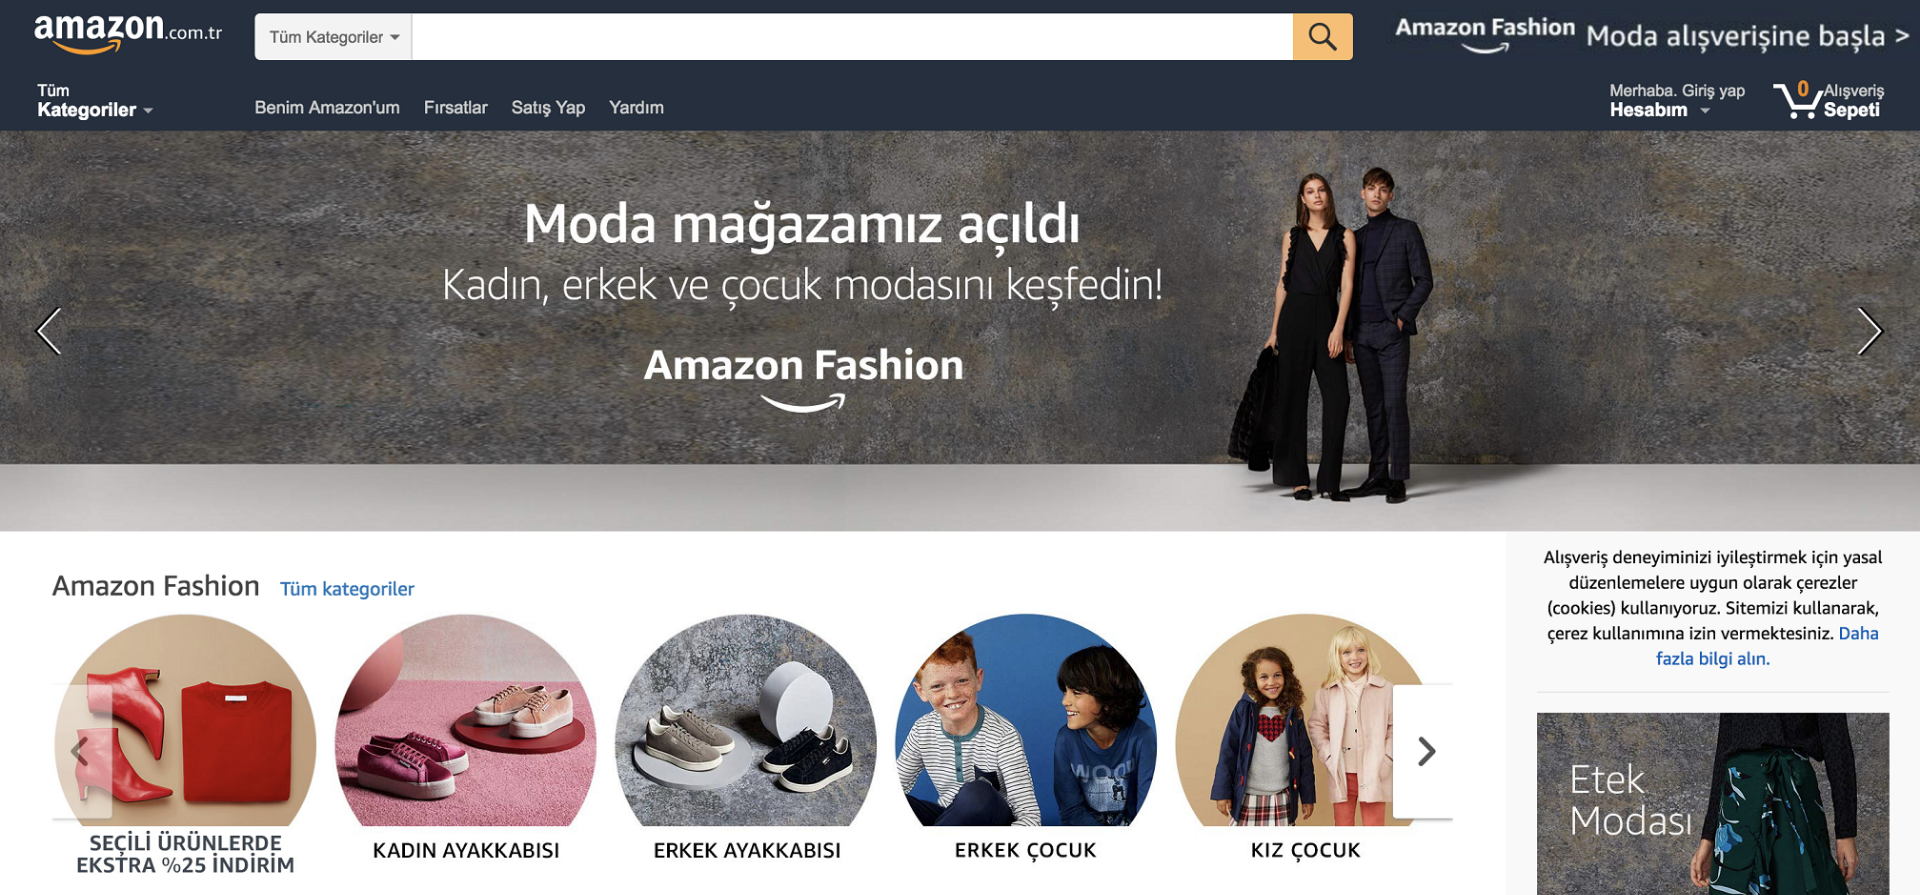 Amazon Fashion birçok markasıyla hizmete girdi